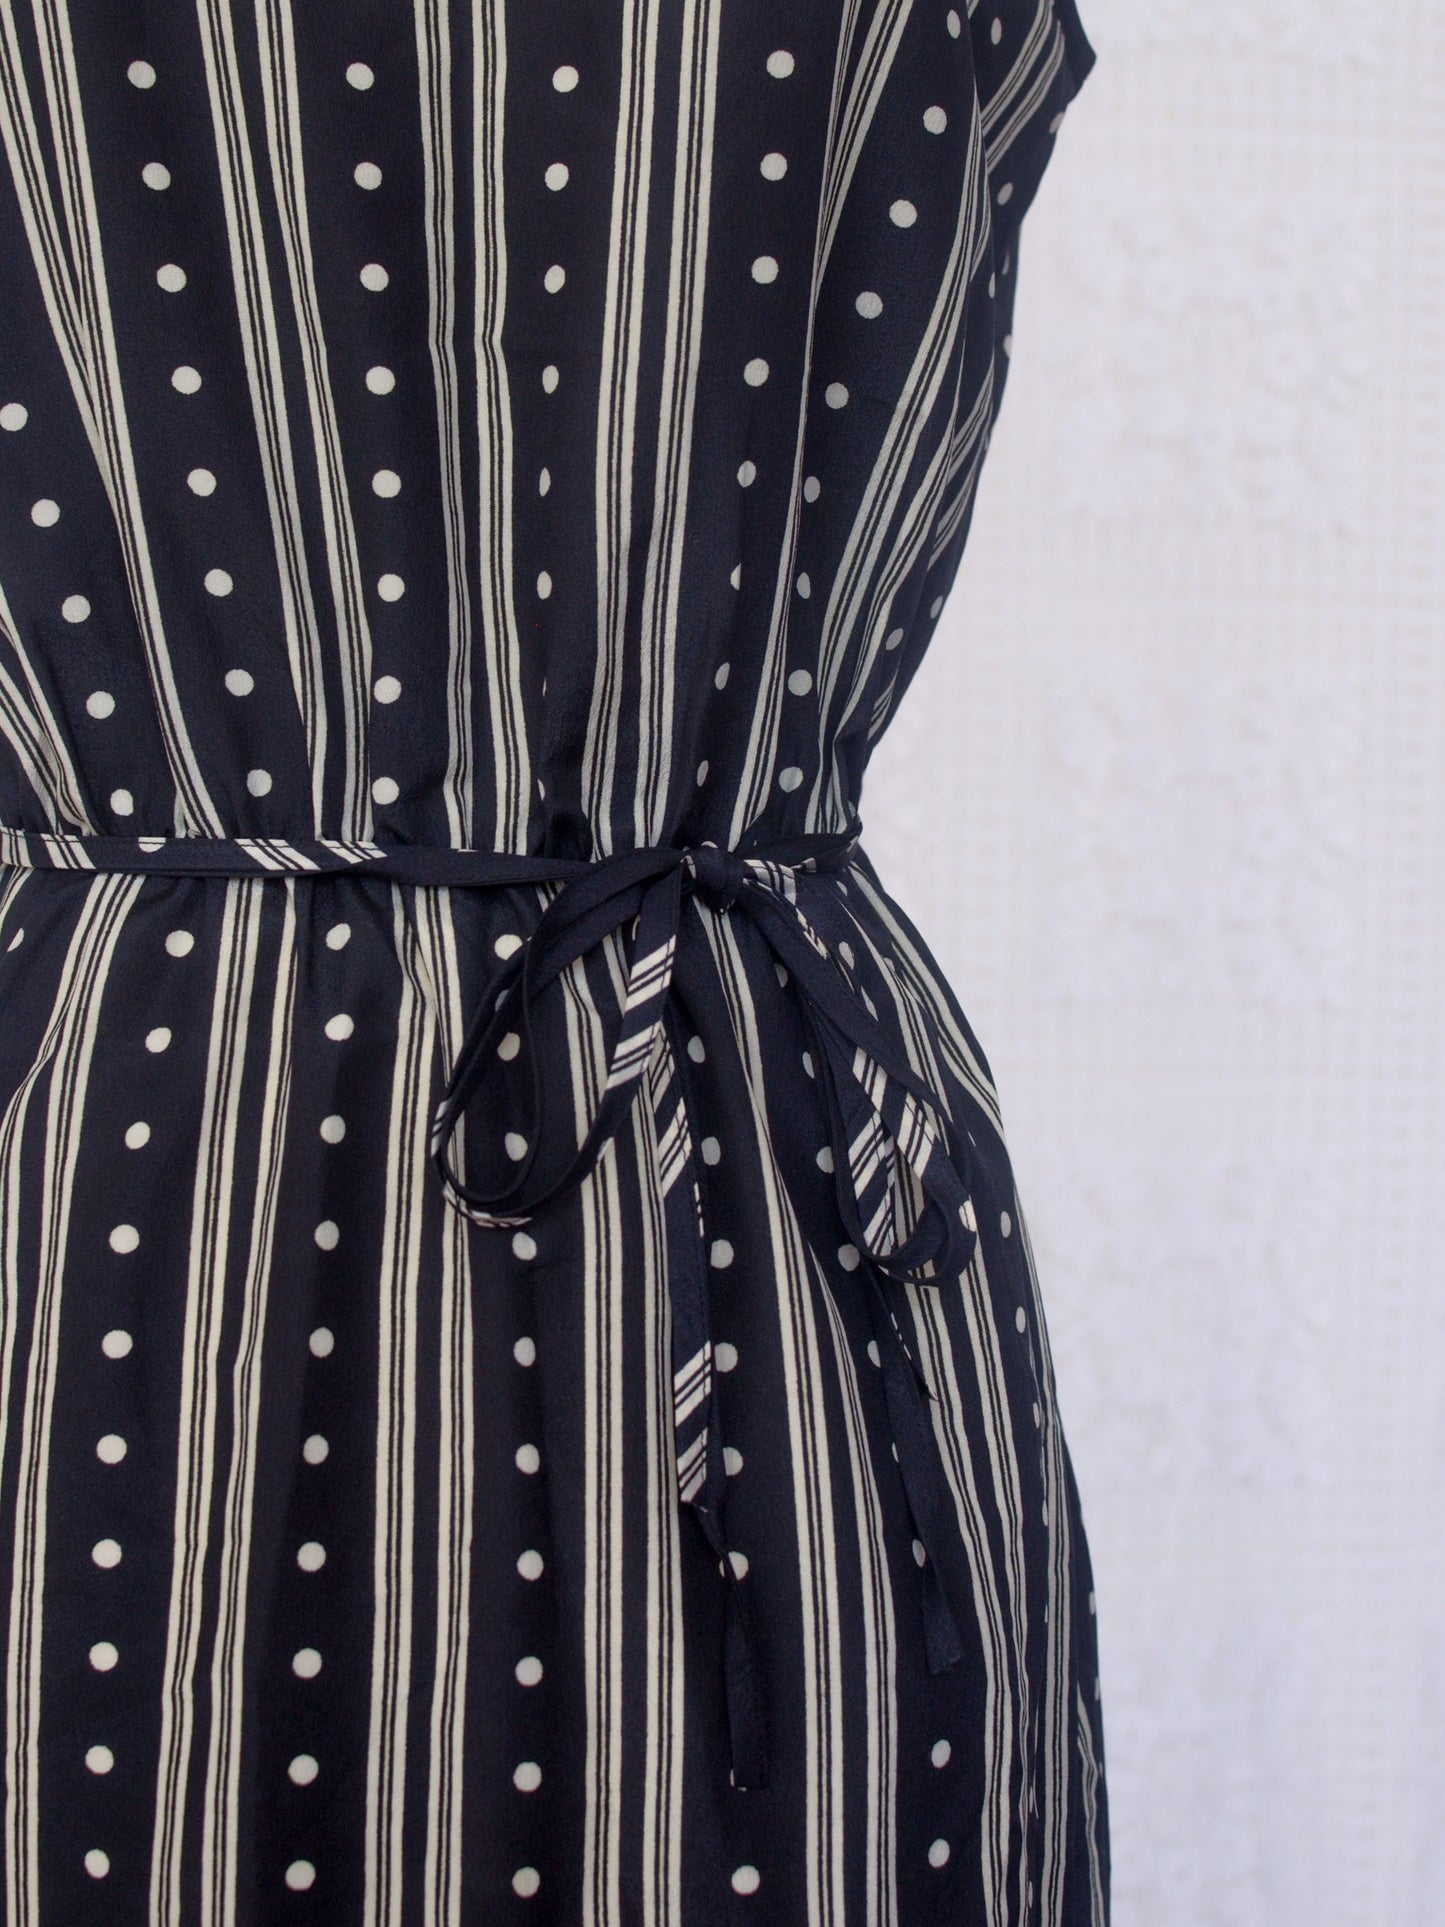 1980s St Michael black and cream stripe and spot pattern sleeveless dress with tie waist belt